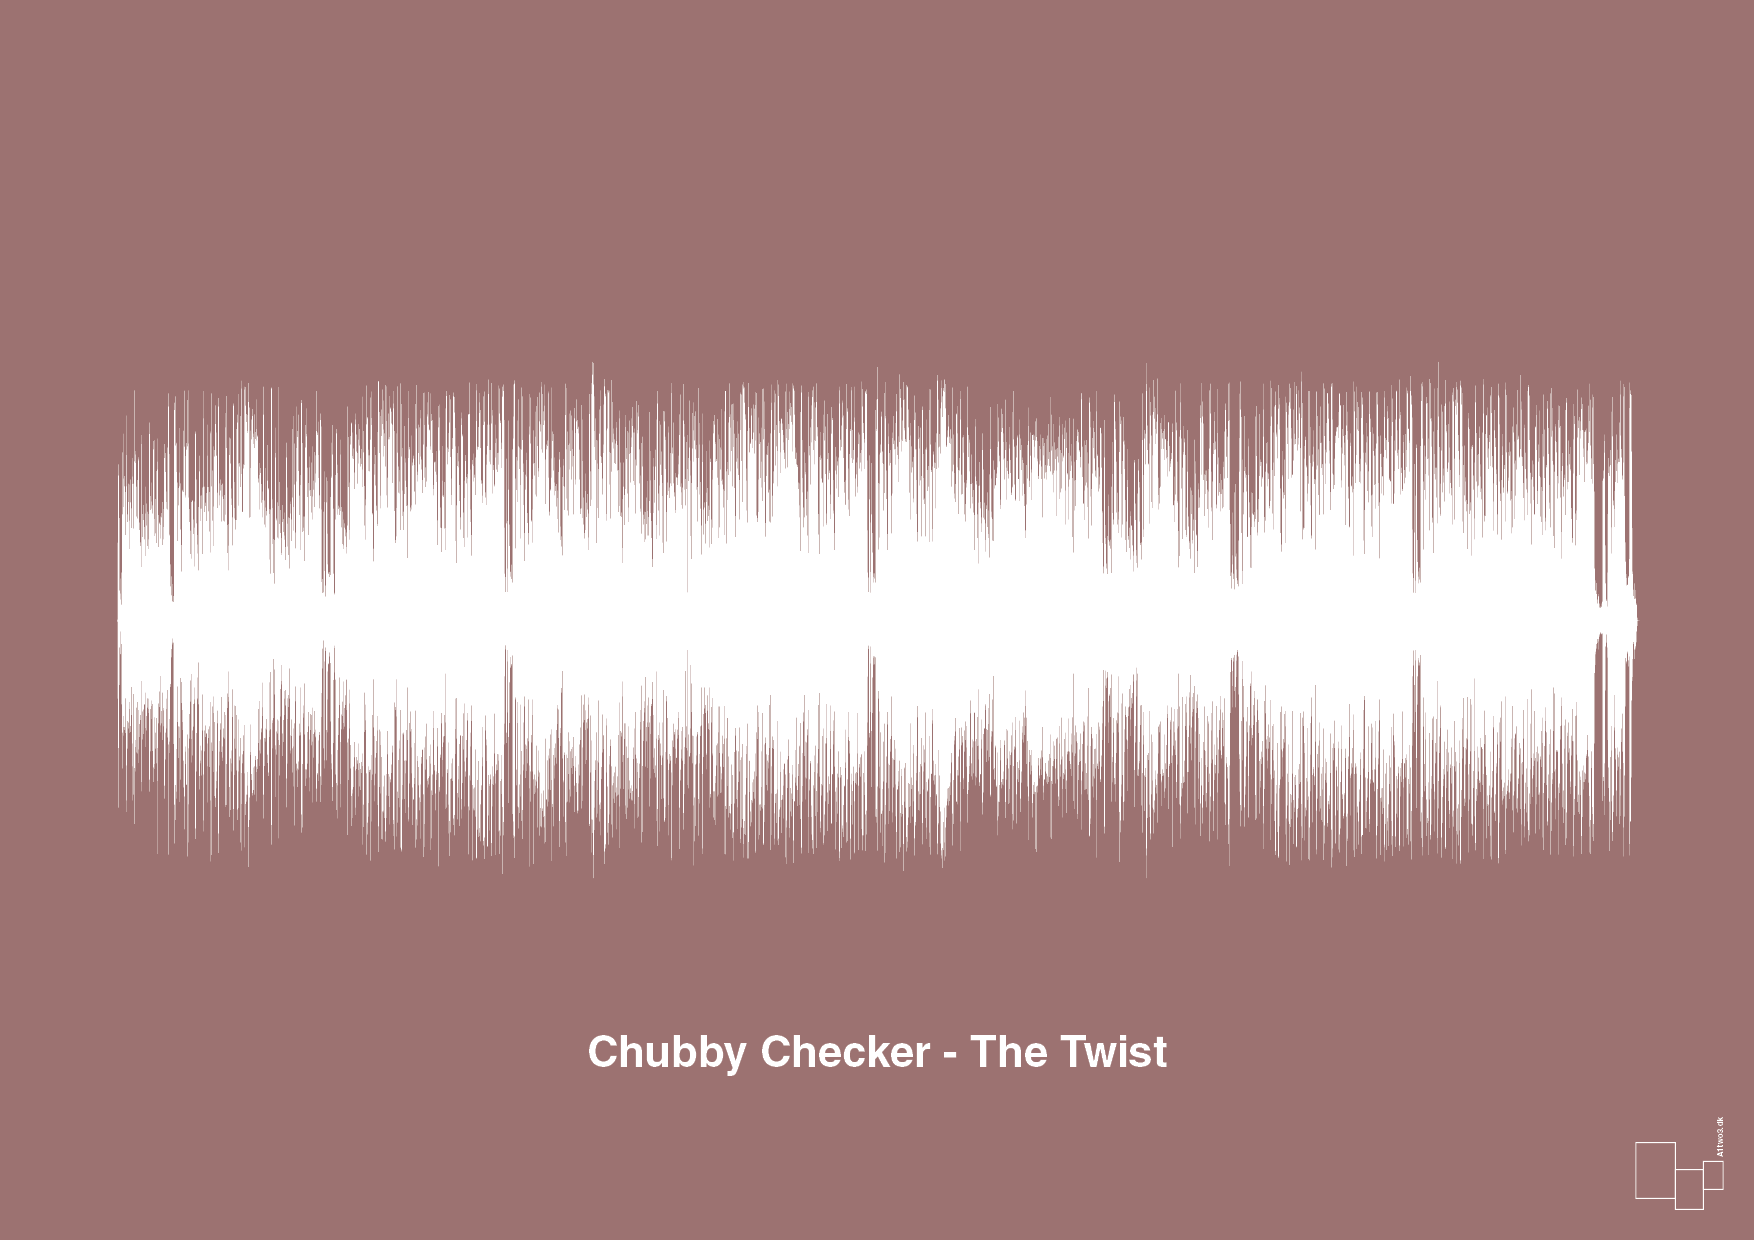 chubby checker - the twist - Plakat med Musik i Plum